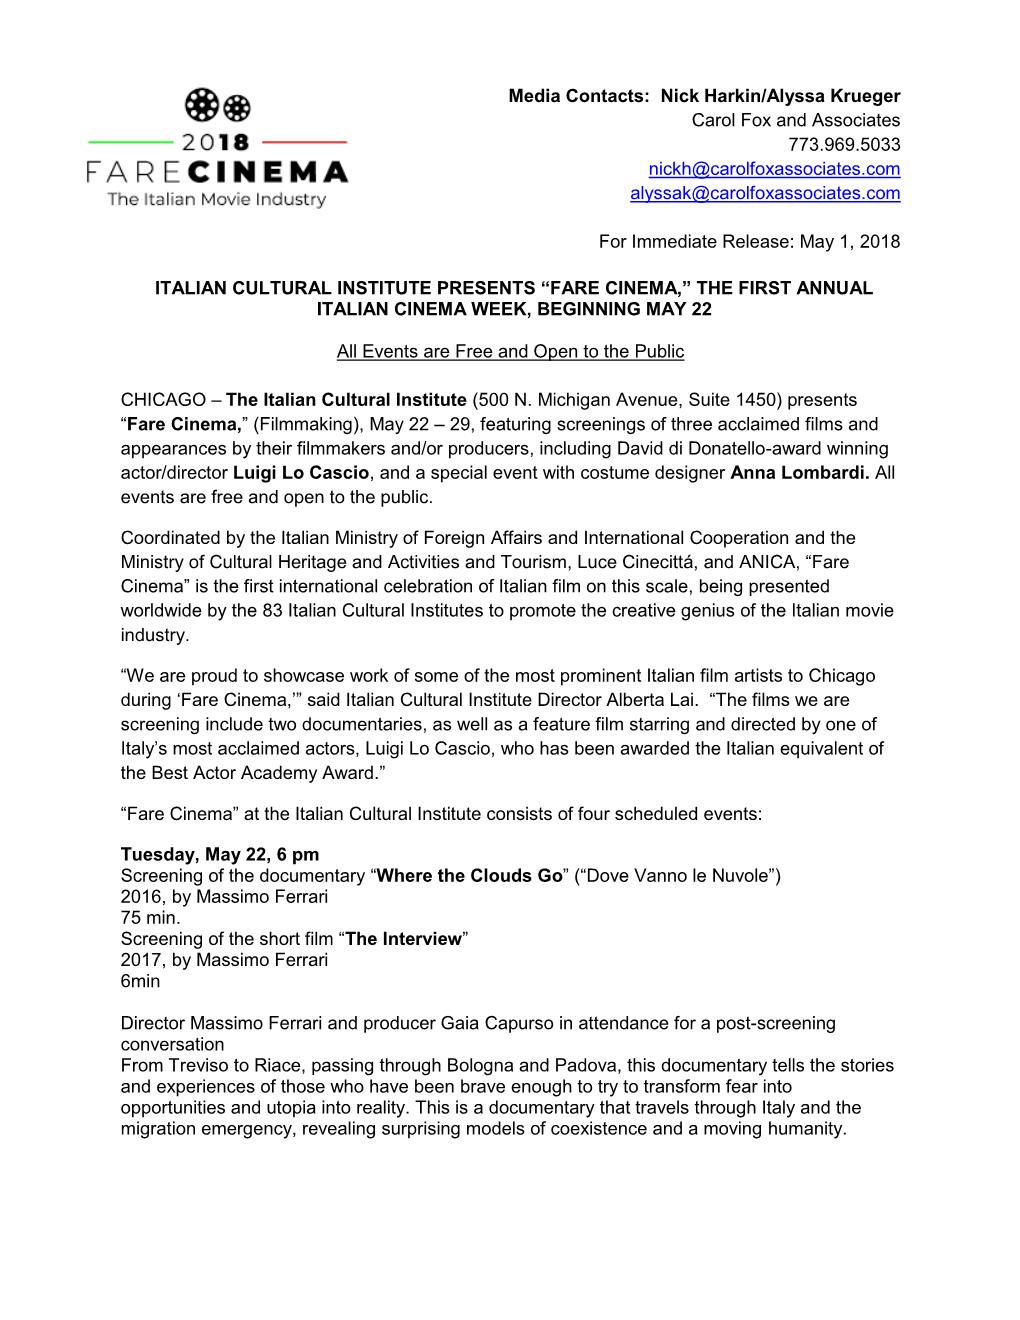 Fare Cinema,” the First Annual Italian Cinema Week, Beginning May 22